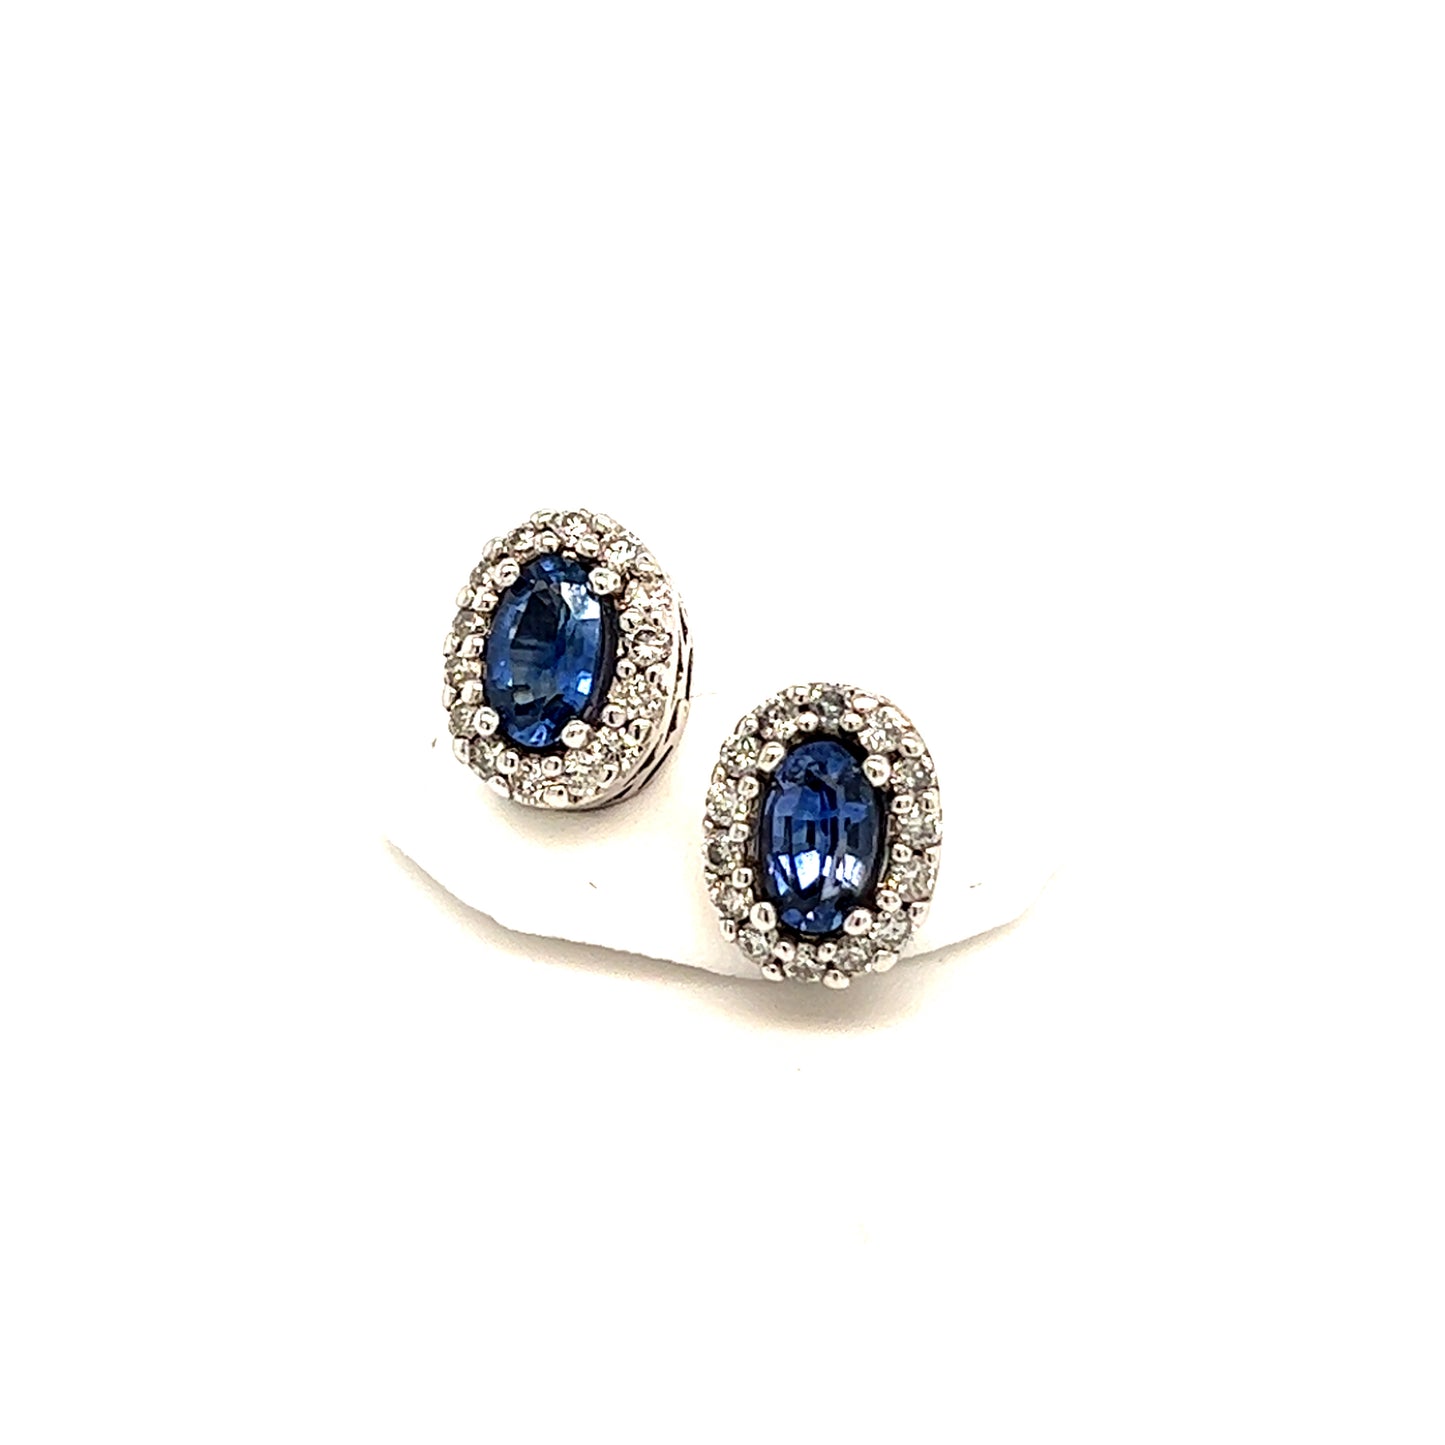 Natural Sapphire Diamond Stud Earrings 14k W Gold 0.64 TCW Certified $3490 121273 - Certified Estate Jewelry